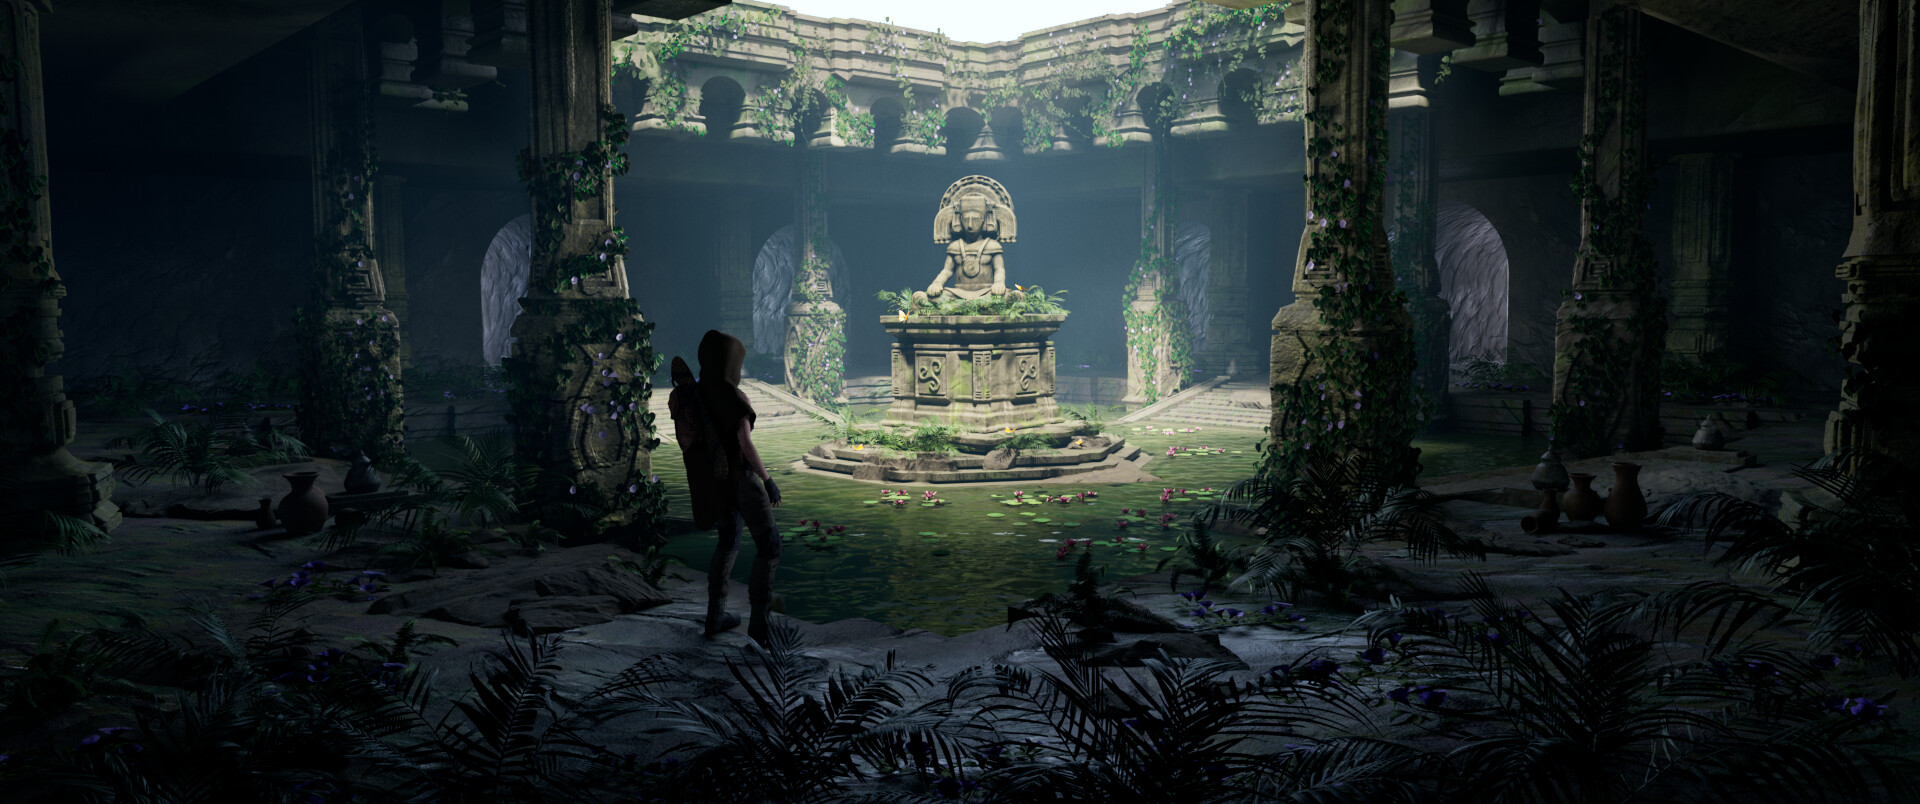 ArtStation - abandoned temple